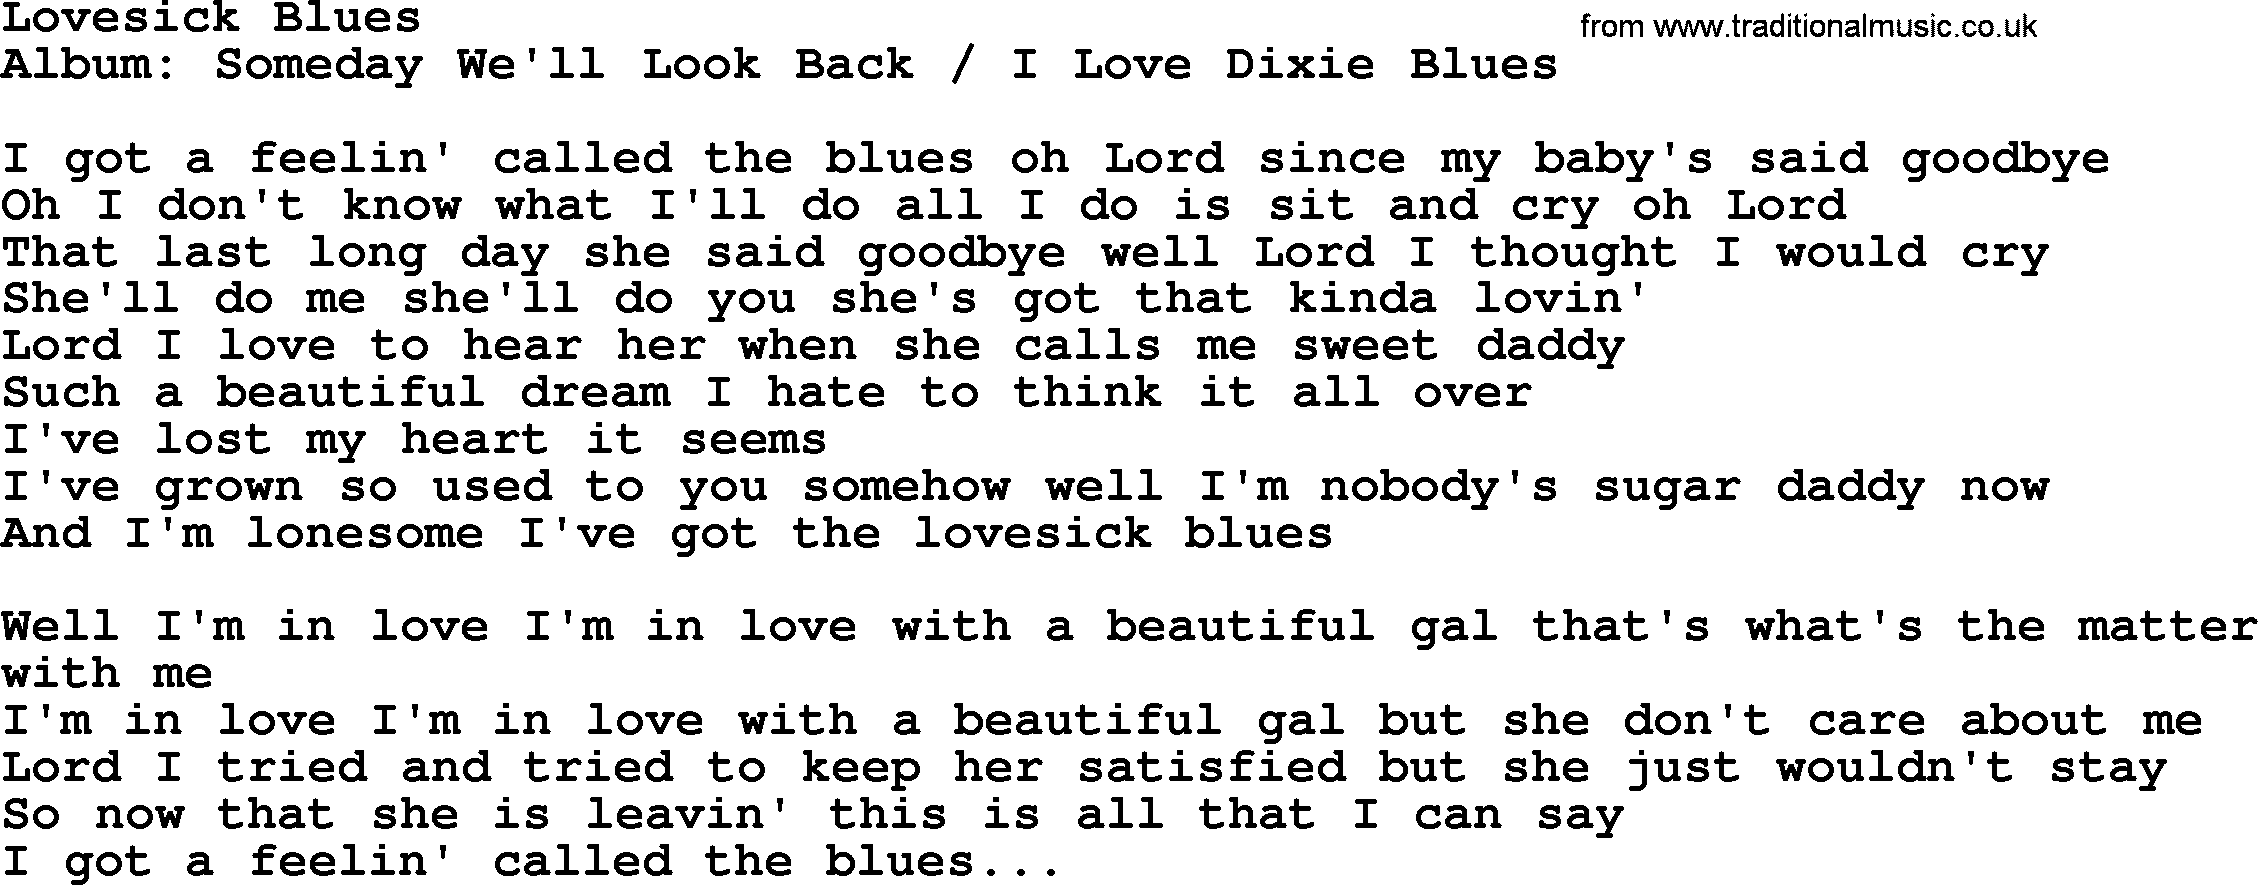 Merle Haggard song: Lovesick Blues, lyrics.